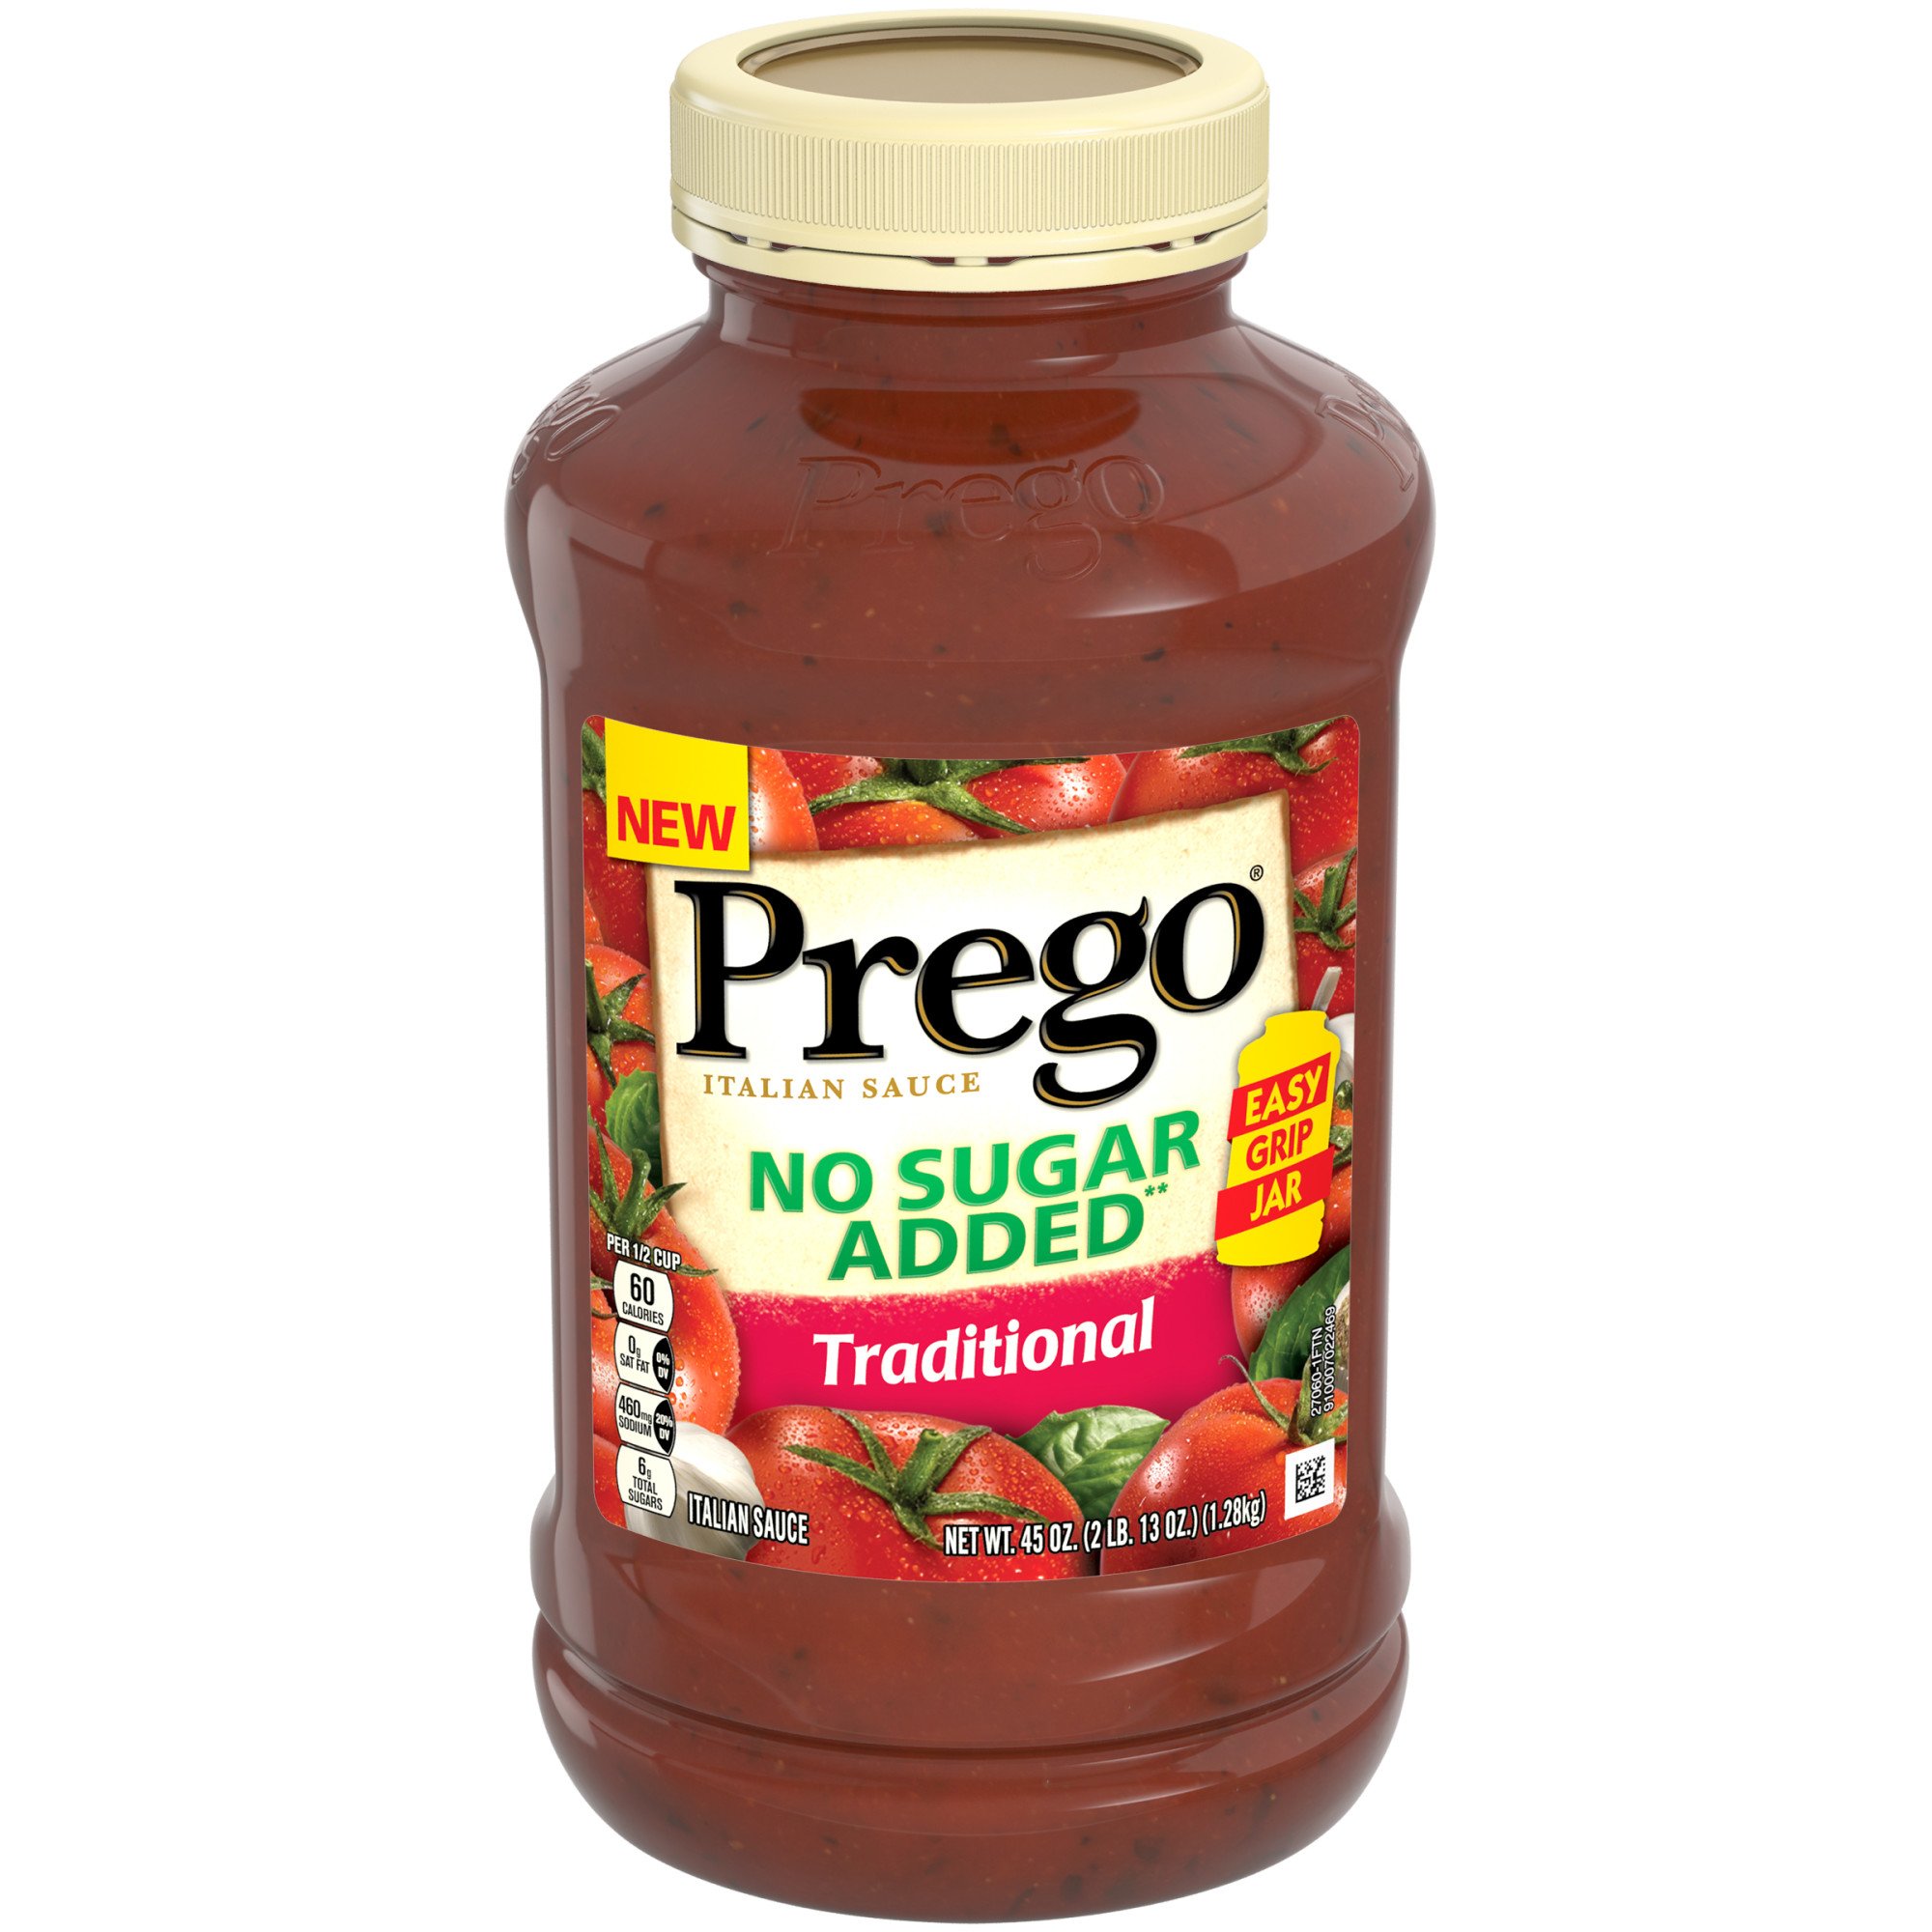 Prego Pasta Sauce, No Sugar Added Traditional, 45 oz PET Jar